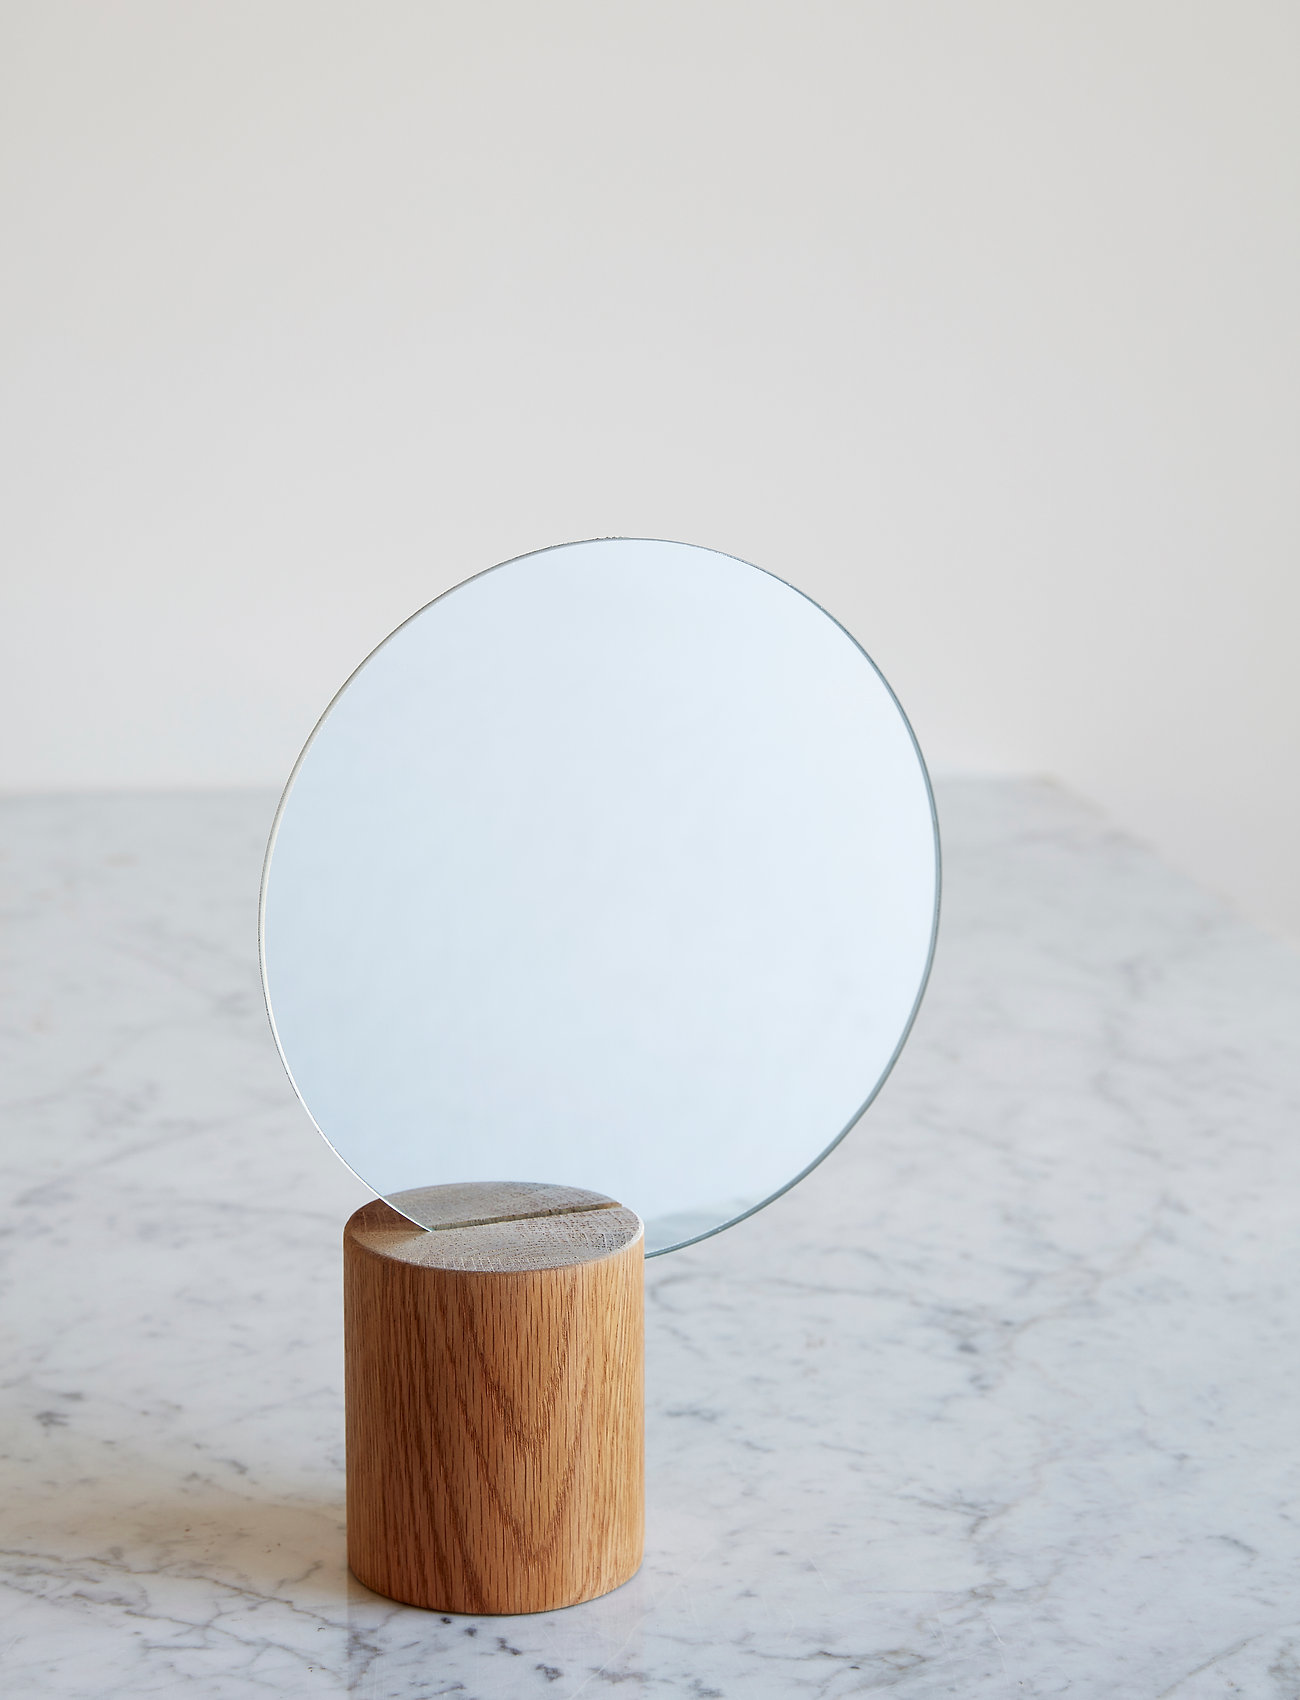 Hübsch - Edge Bordspejl - runde spejle - nature - 1